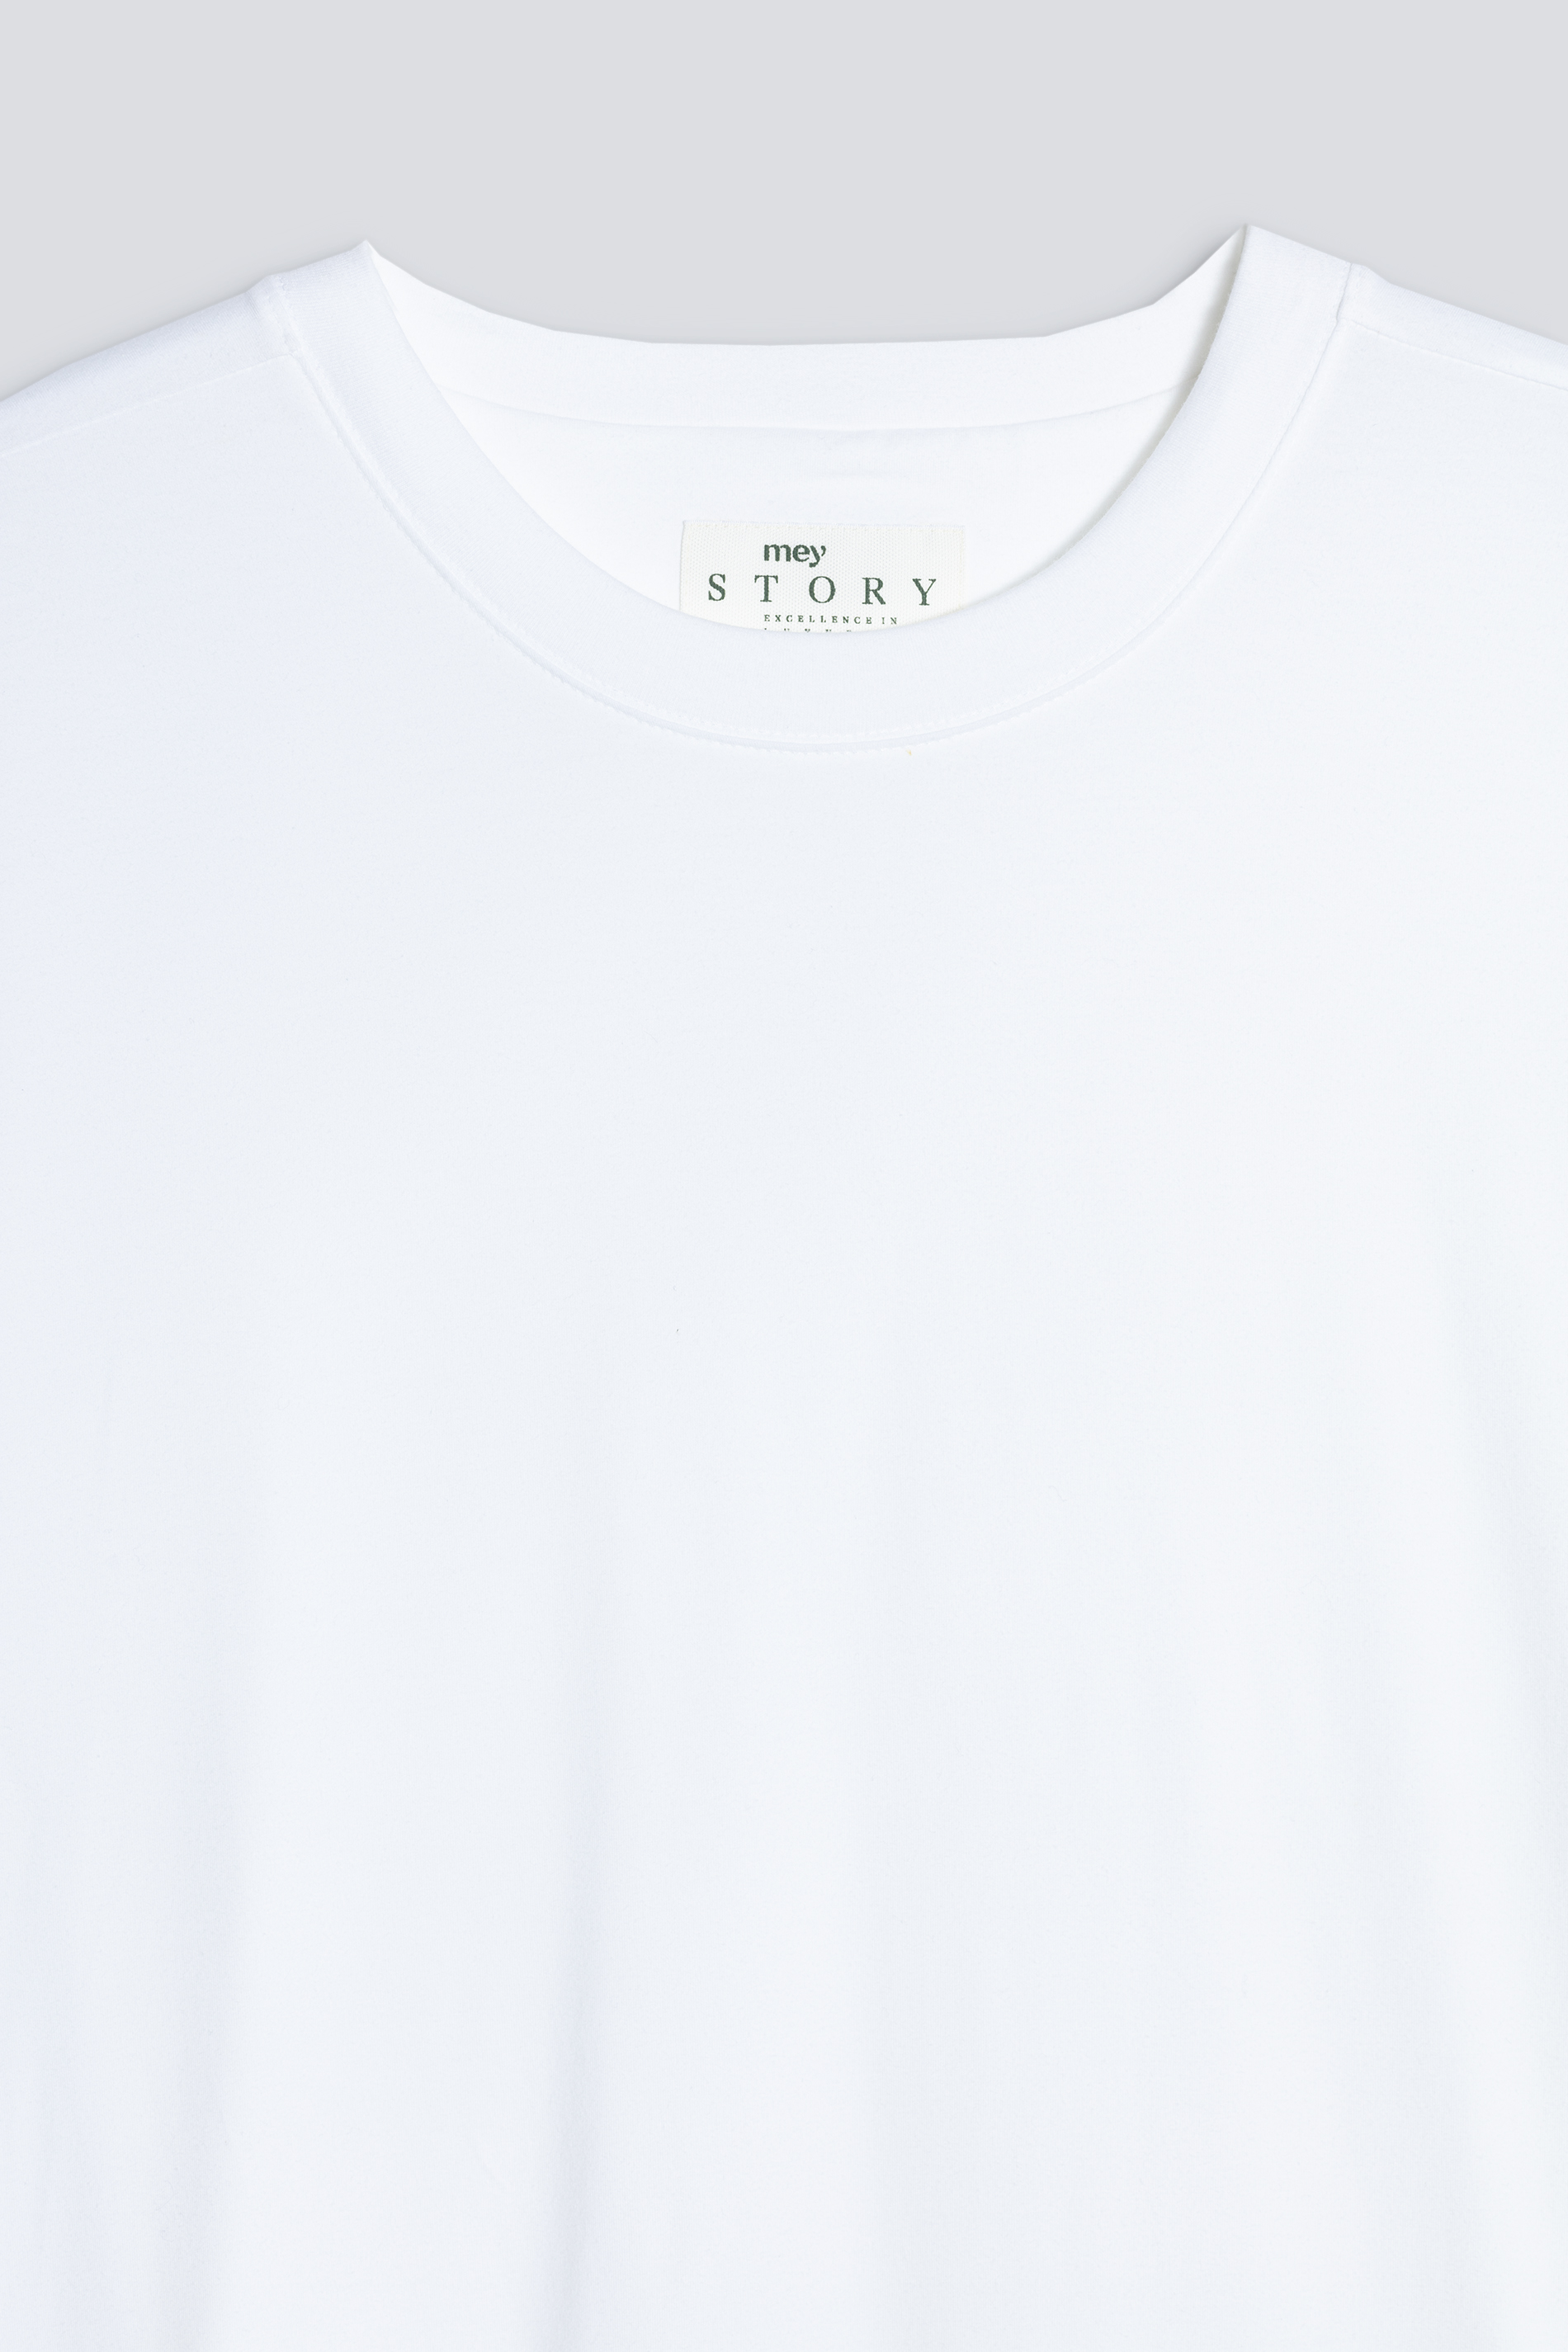 Crew Neck T-Shirt Weiss Serie Cotone Stretch Detailansicht 01 | mey®